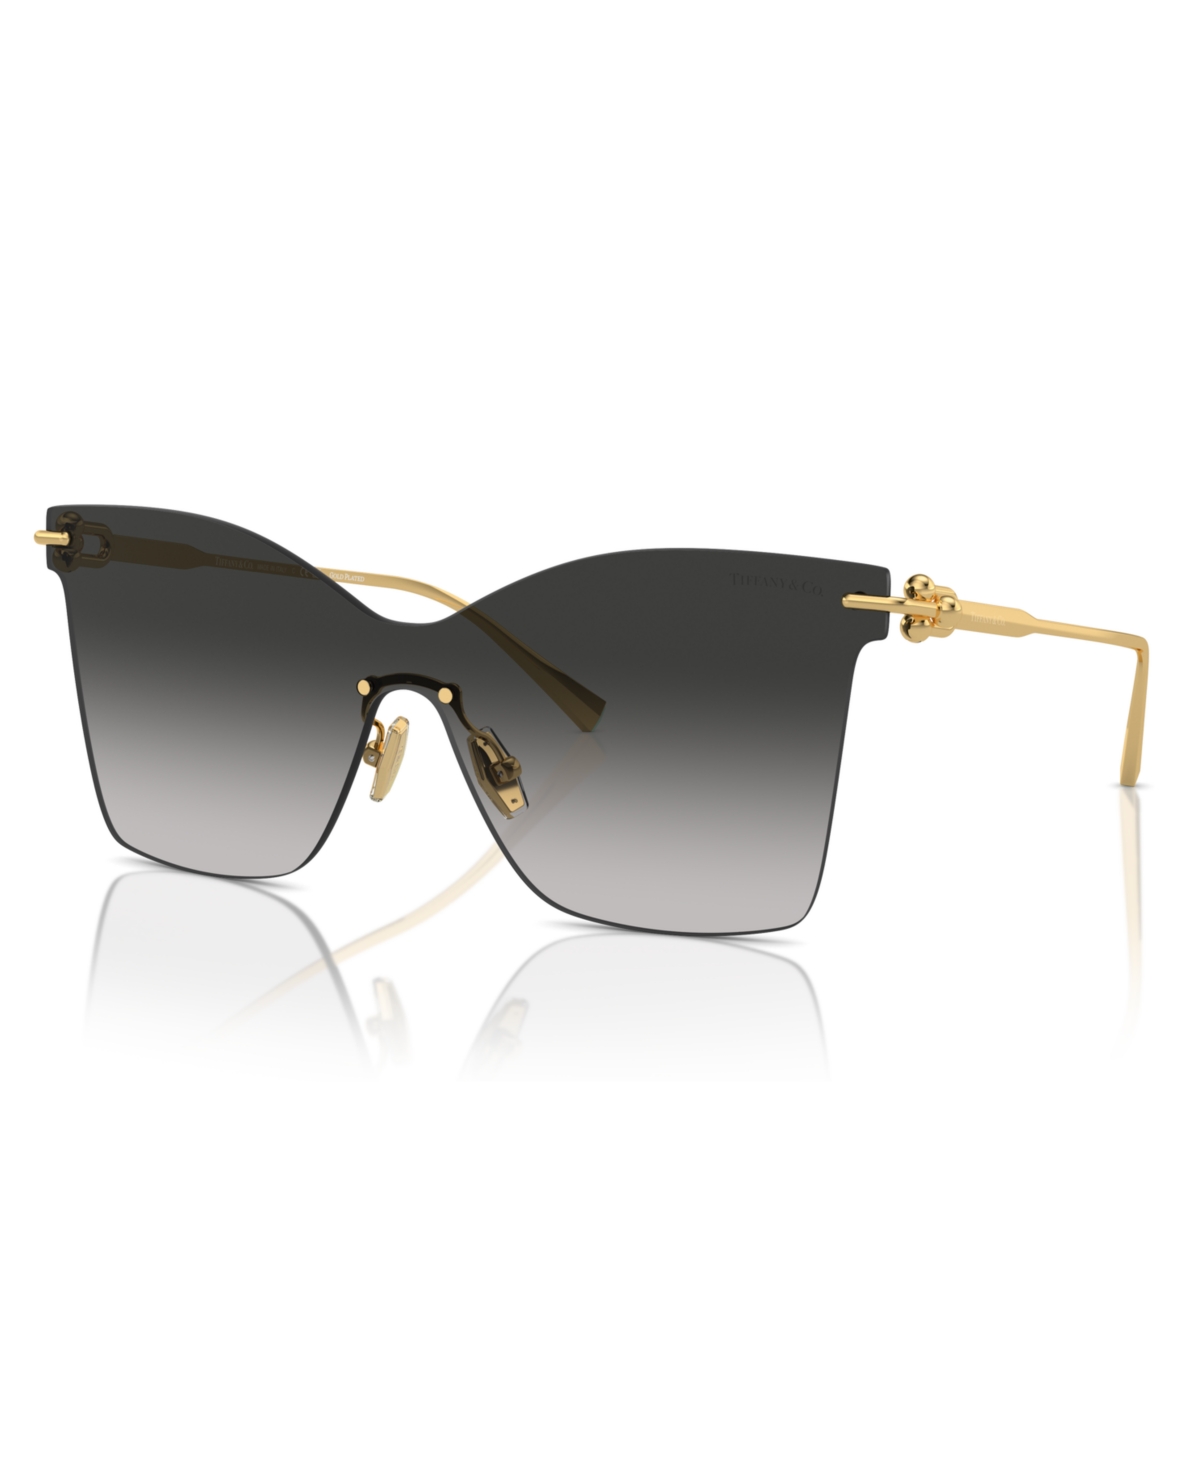 Tiffany & Co Women's Sunglasses, Tf3103k In Grey Gradient